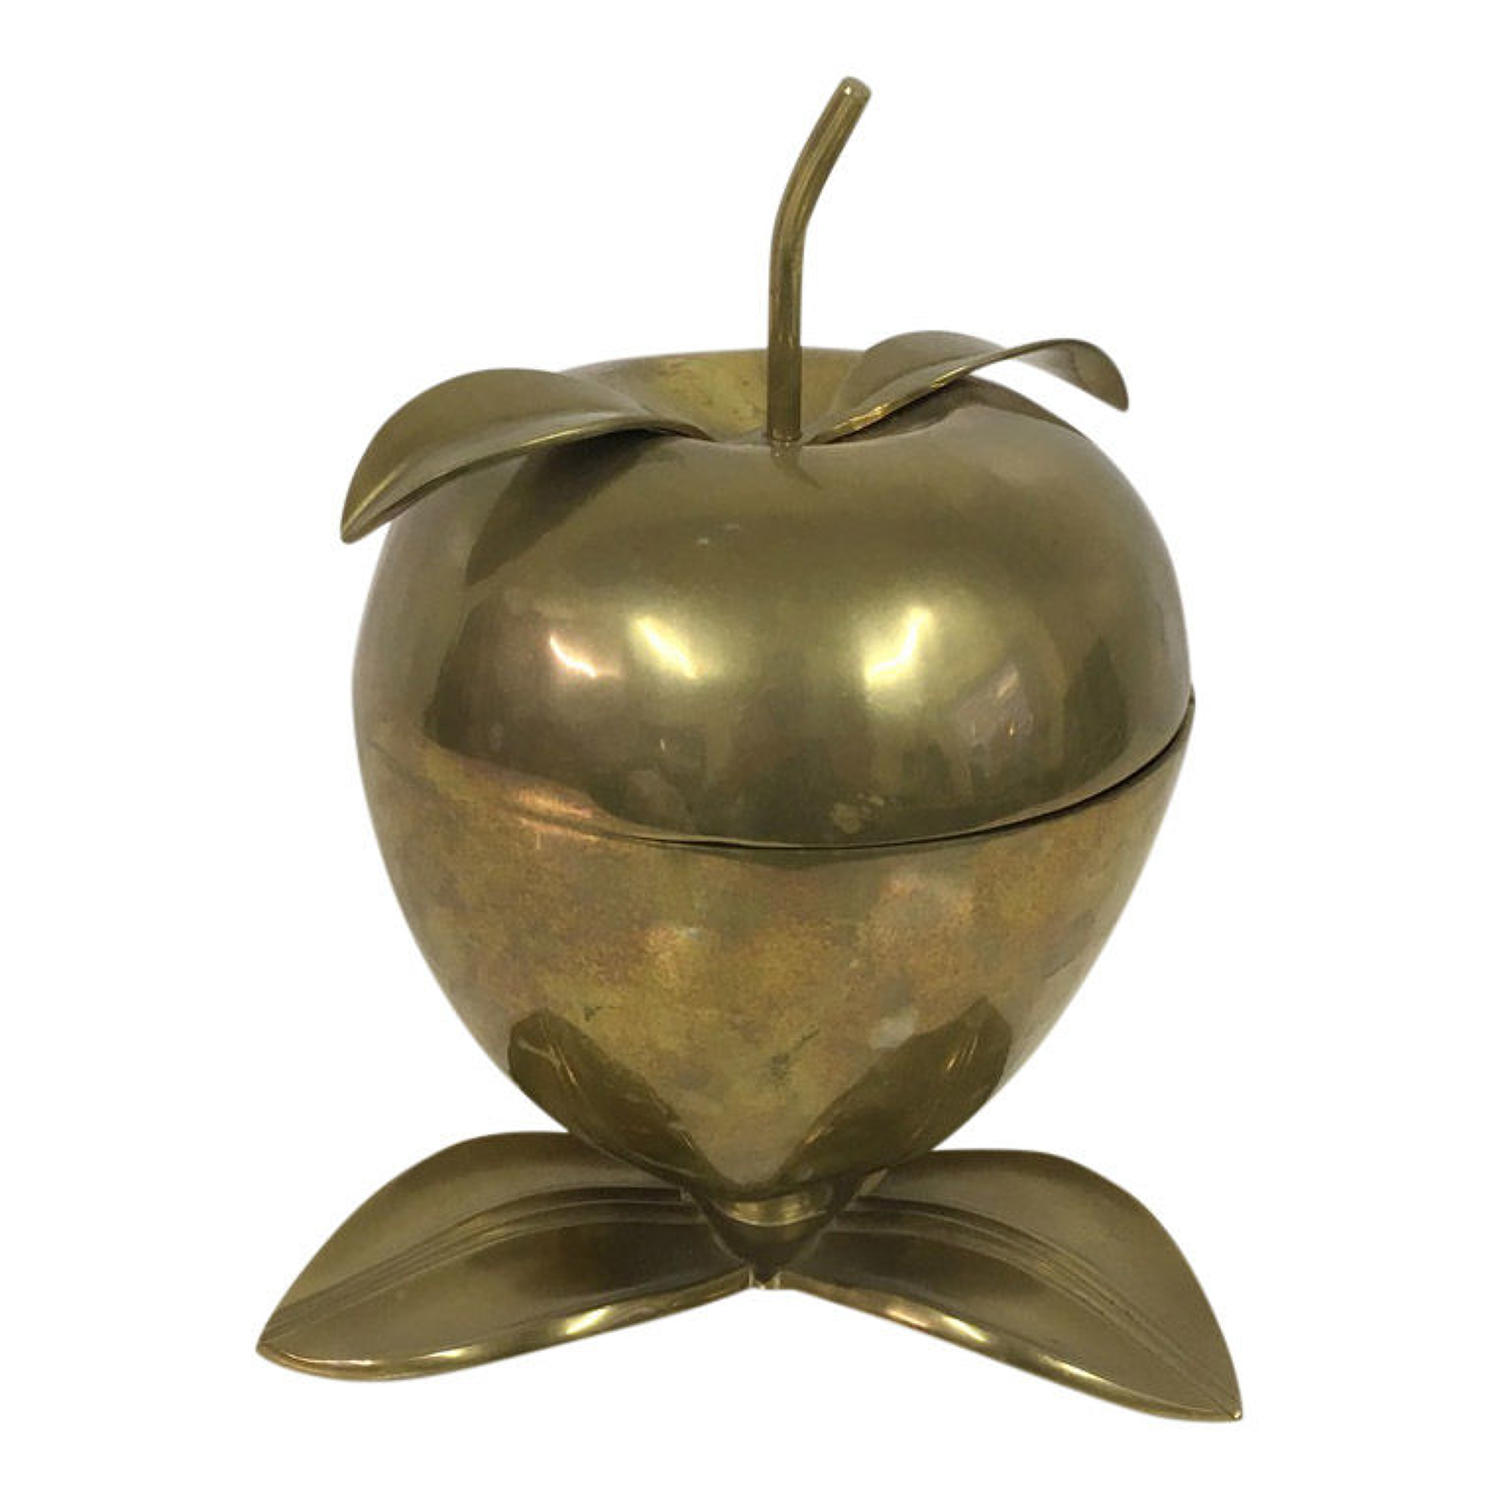 1970s brass apple storage bowl